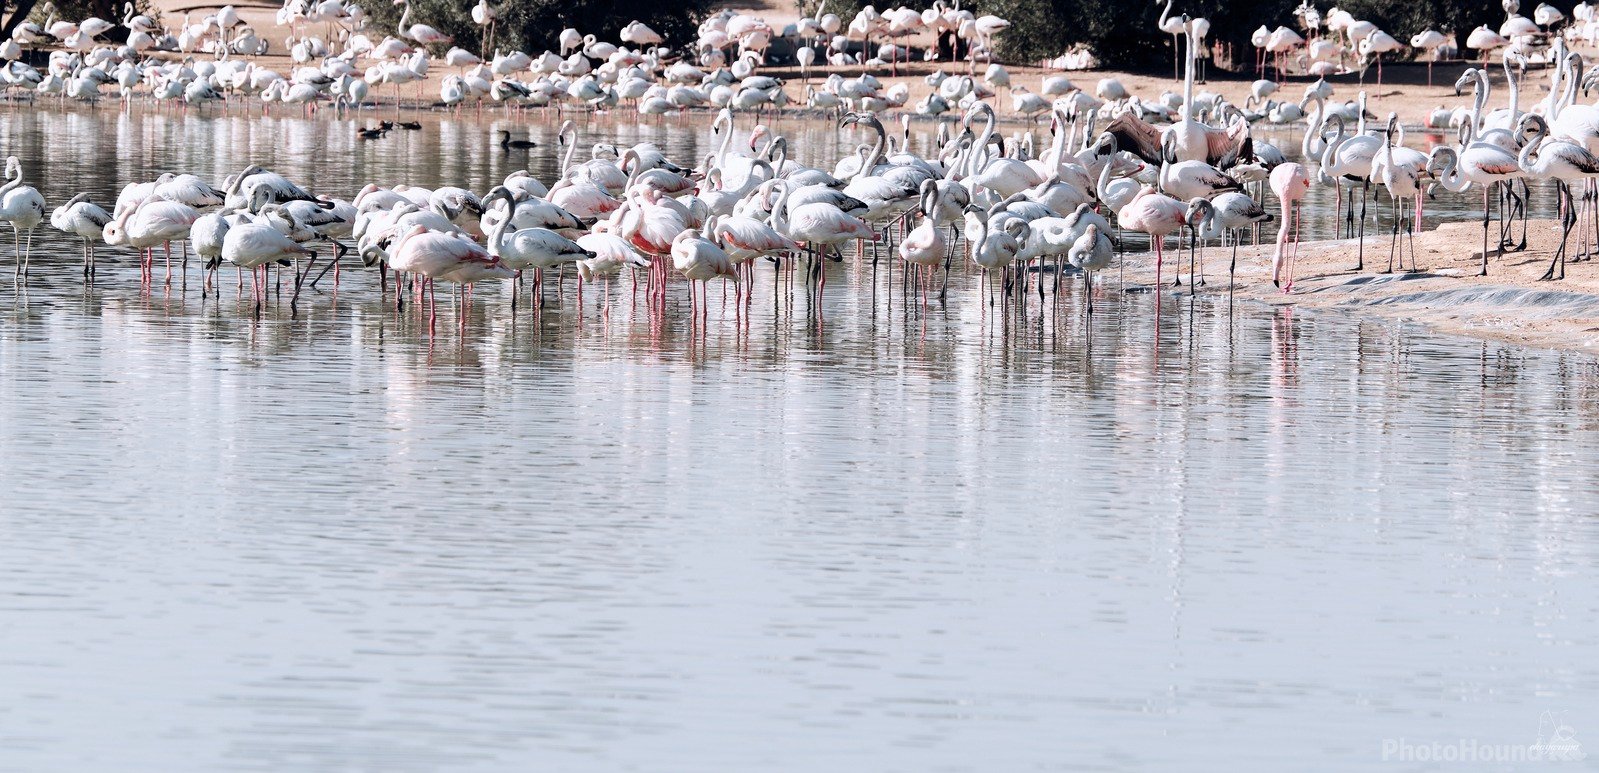 Image of Qudra Lakes by Rivi Wickramarachchi